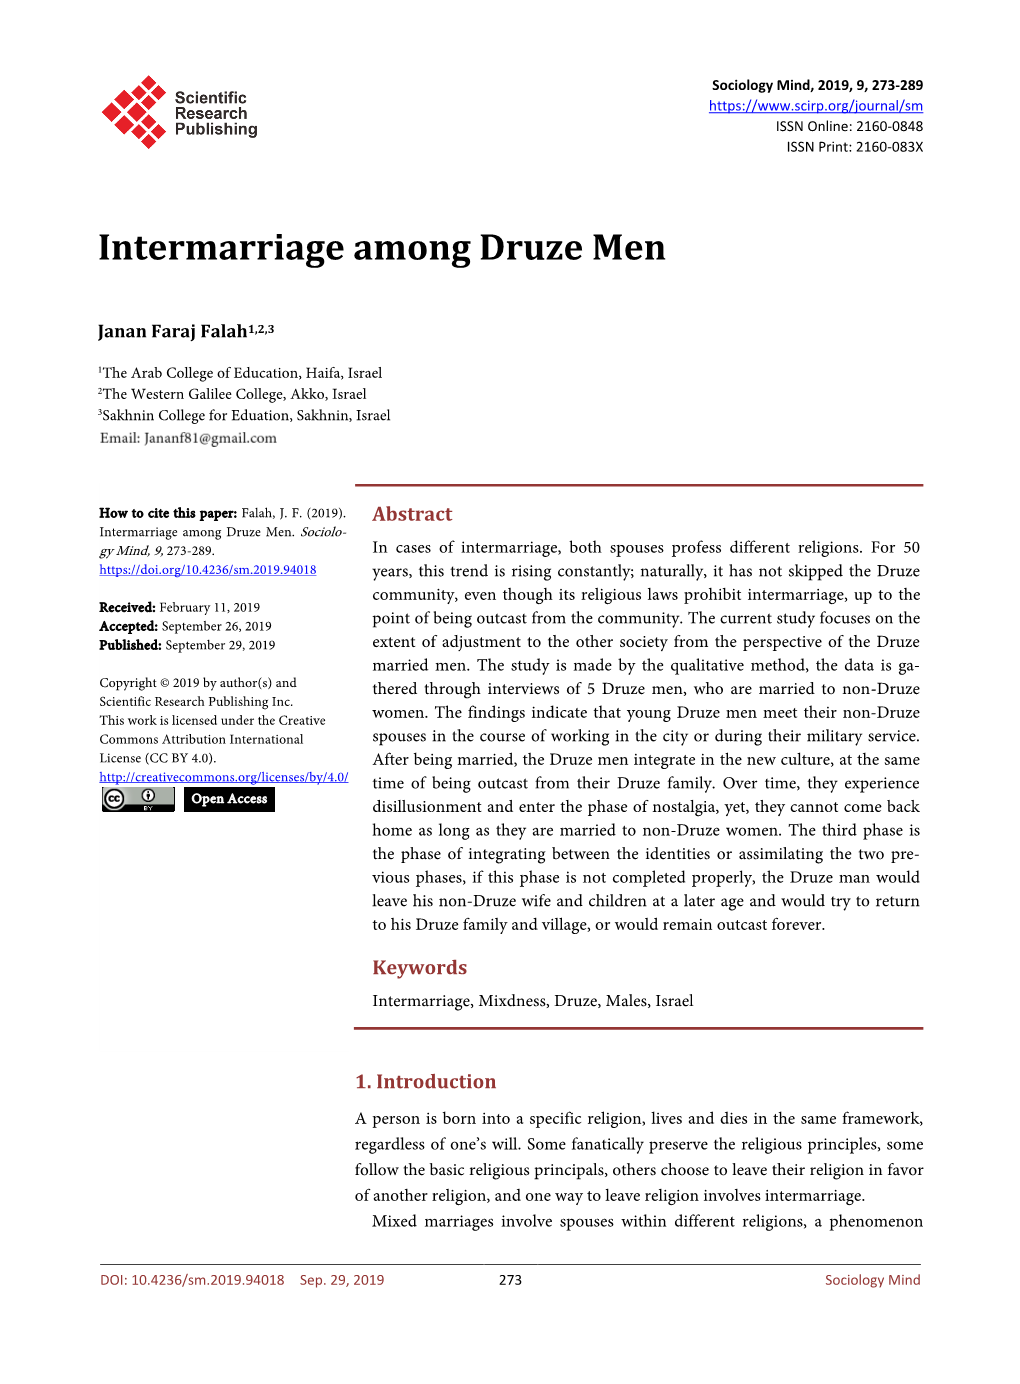 Intermarriage Among Druze Men